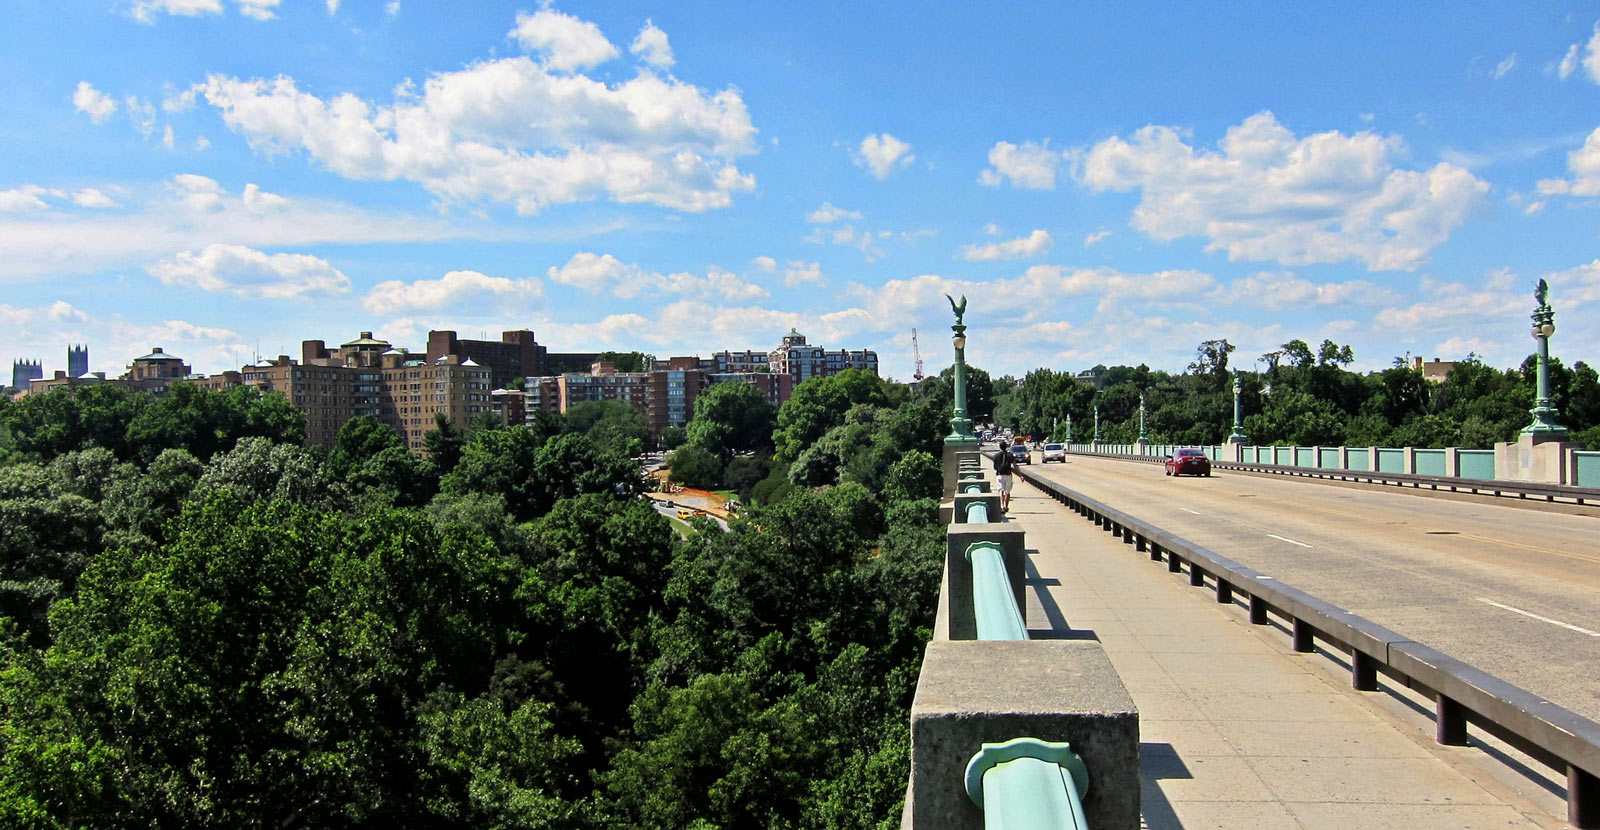 View of Woodley Park Neighborhood from the Taft Bridge in Washington, DC